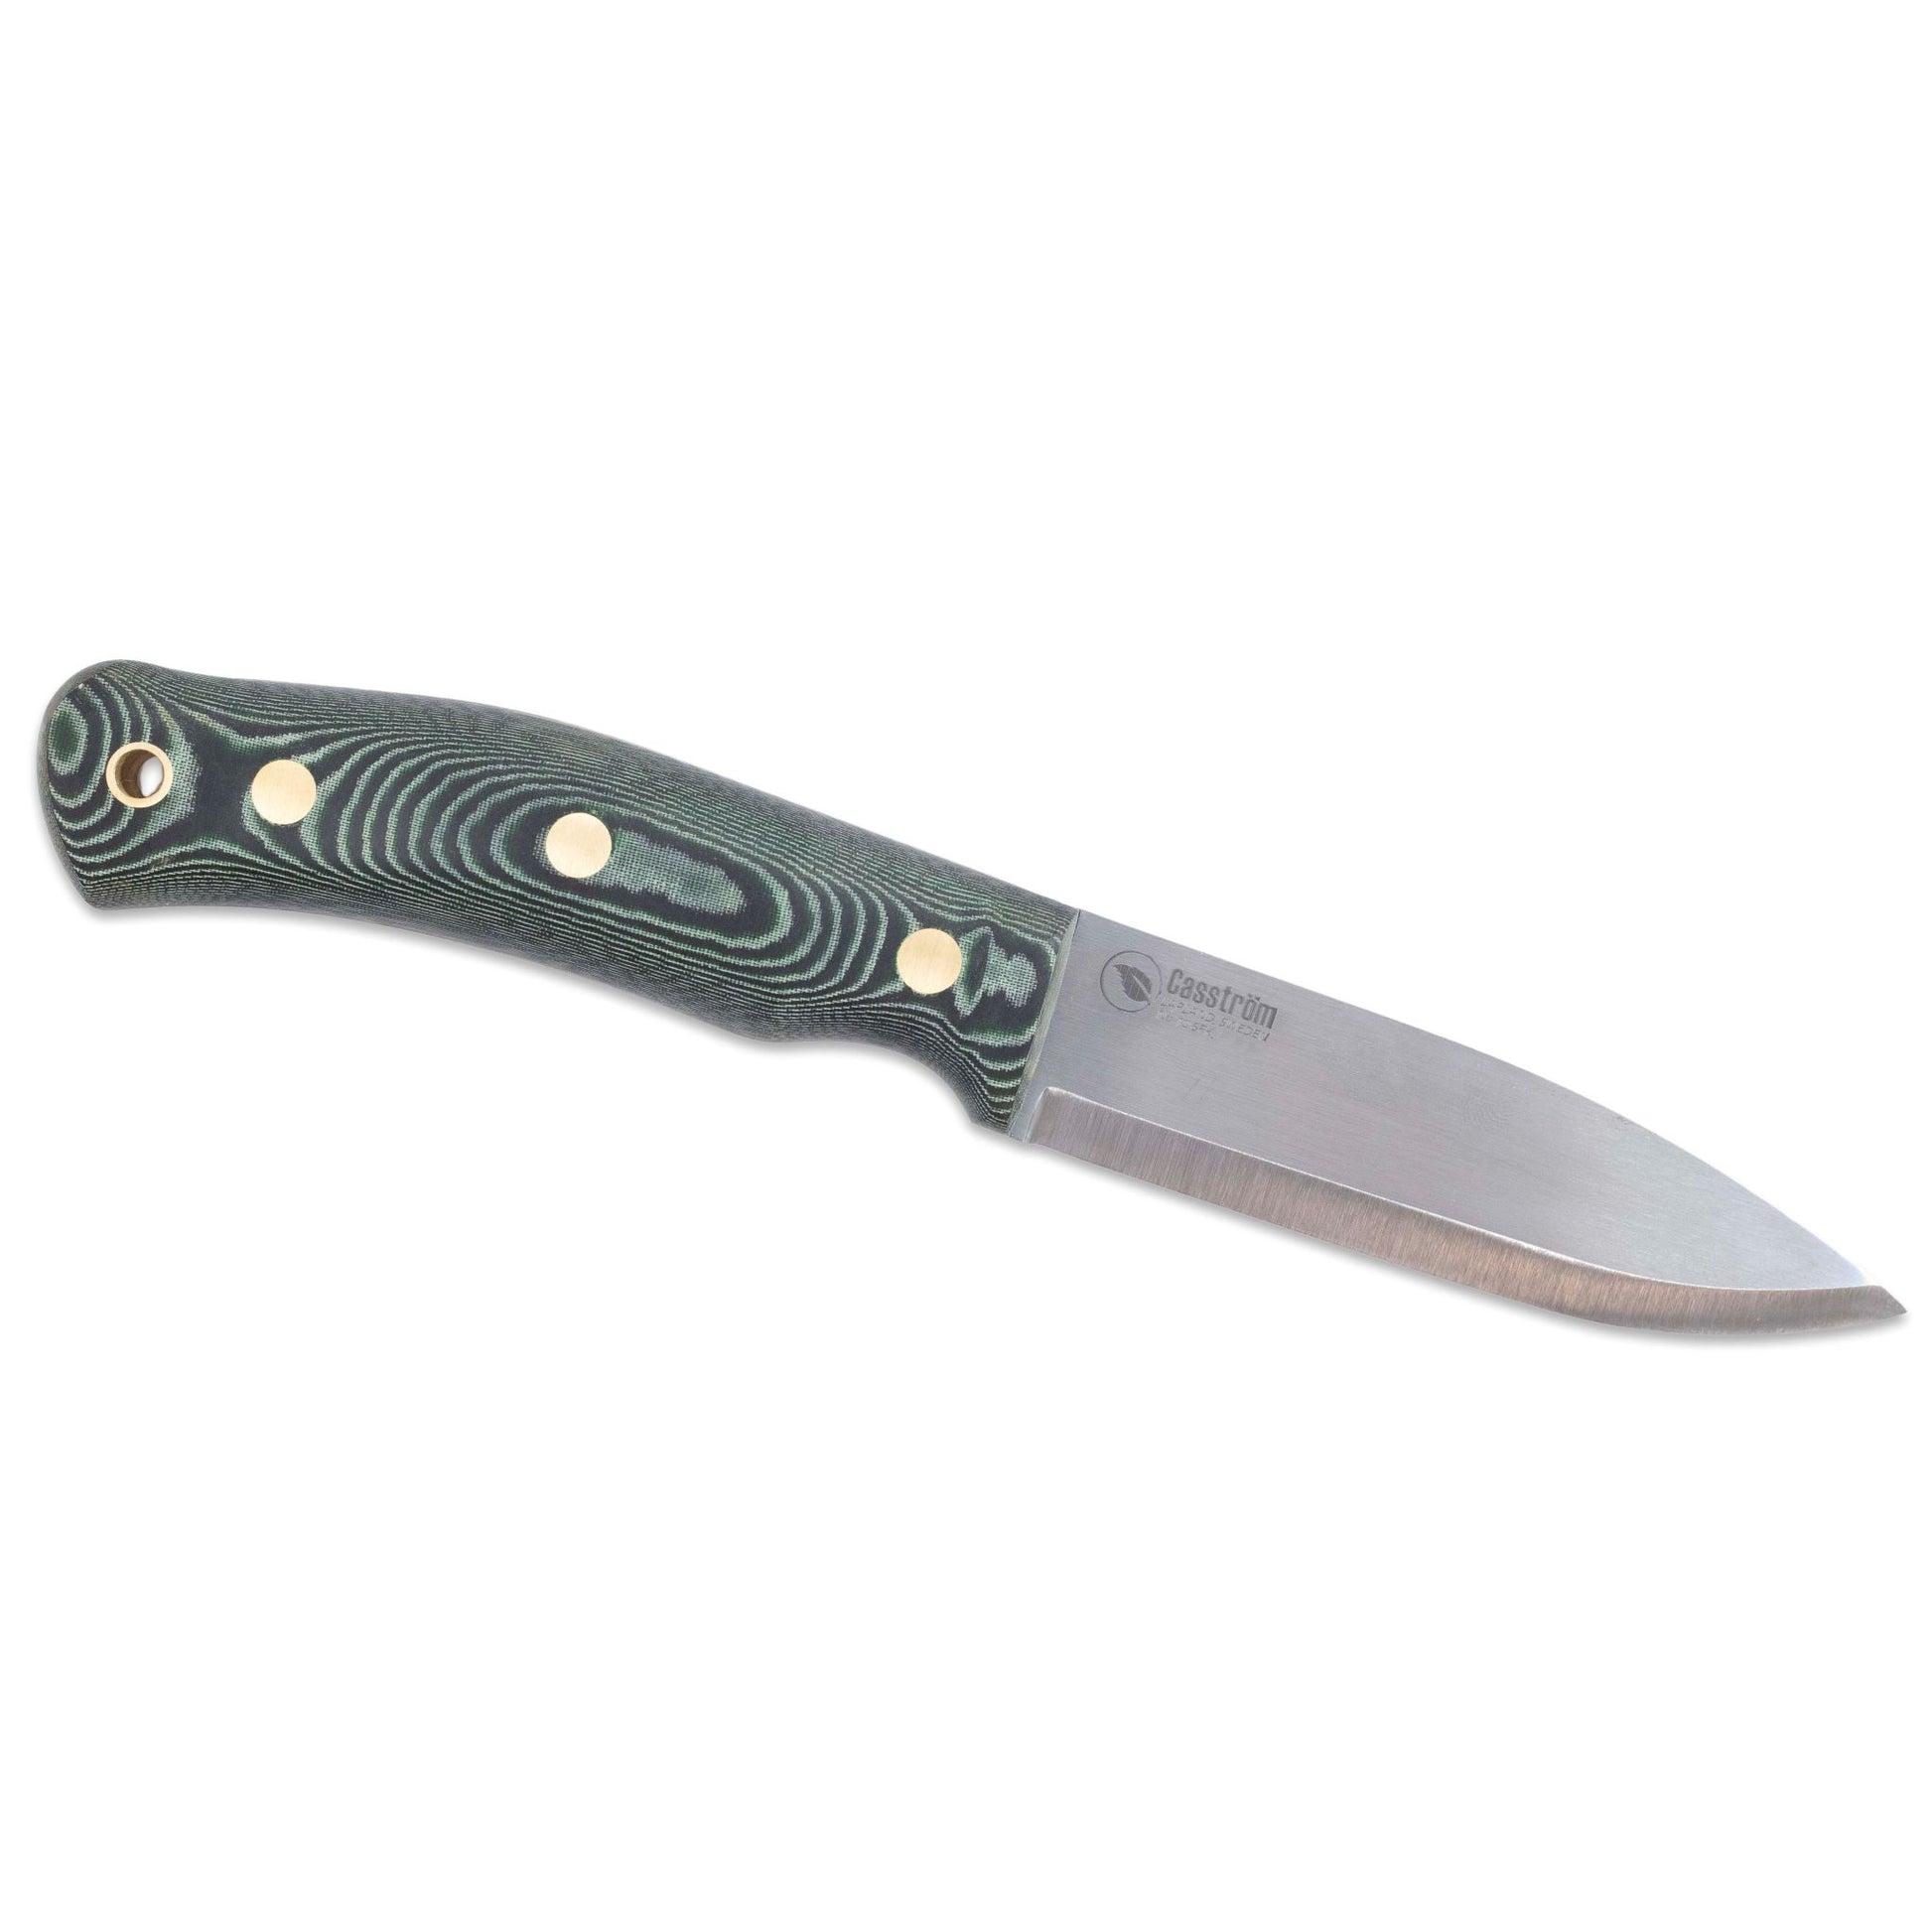 Casström No.10 SFK with green micarta handle and  scandi grind Sleipner steel blade